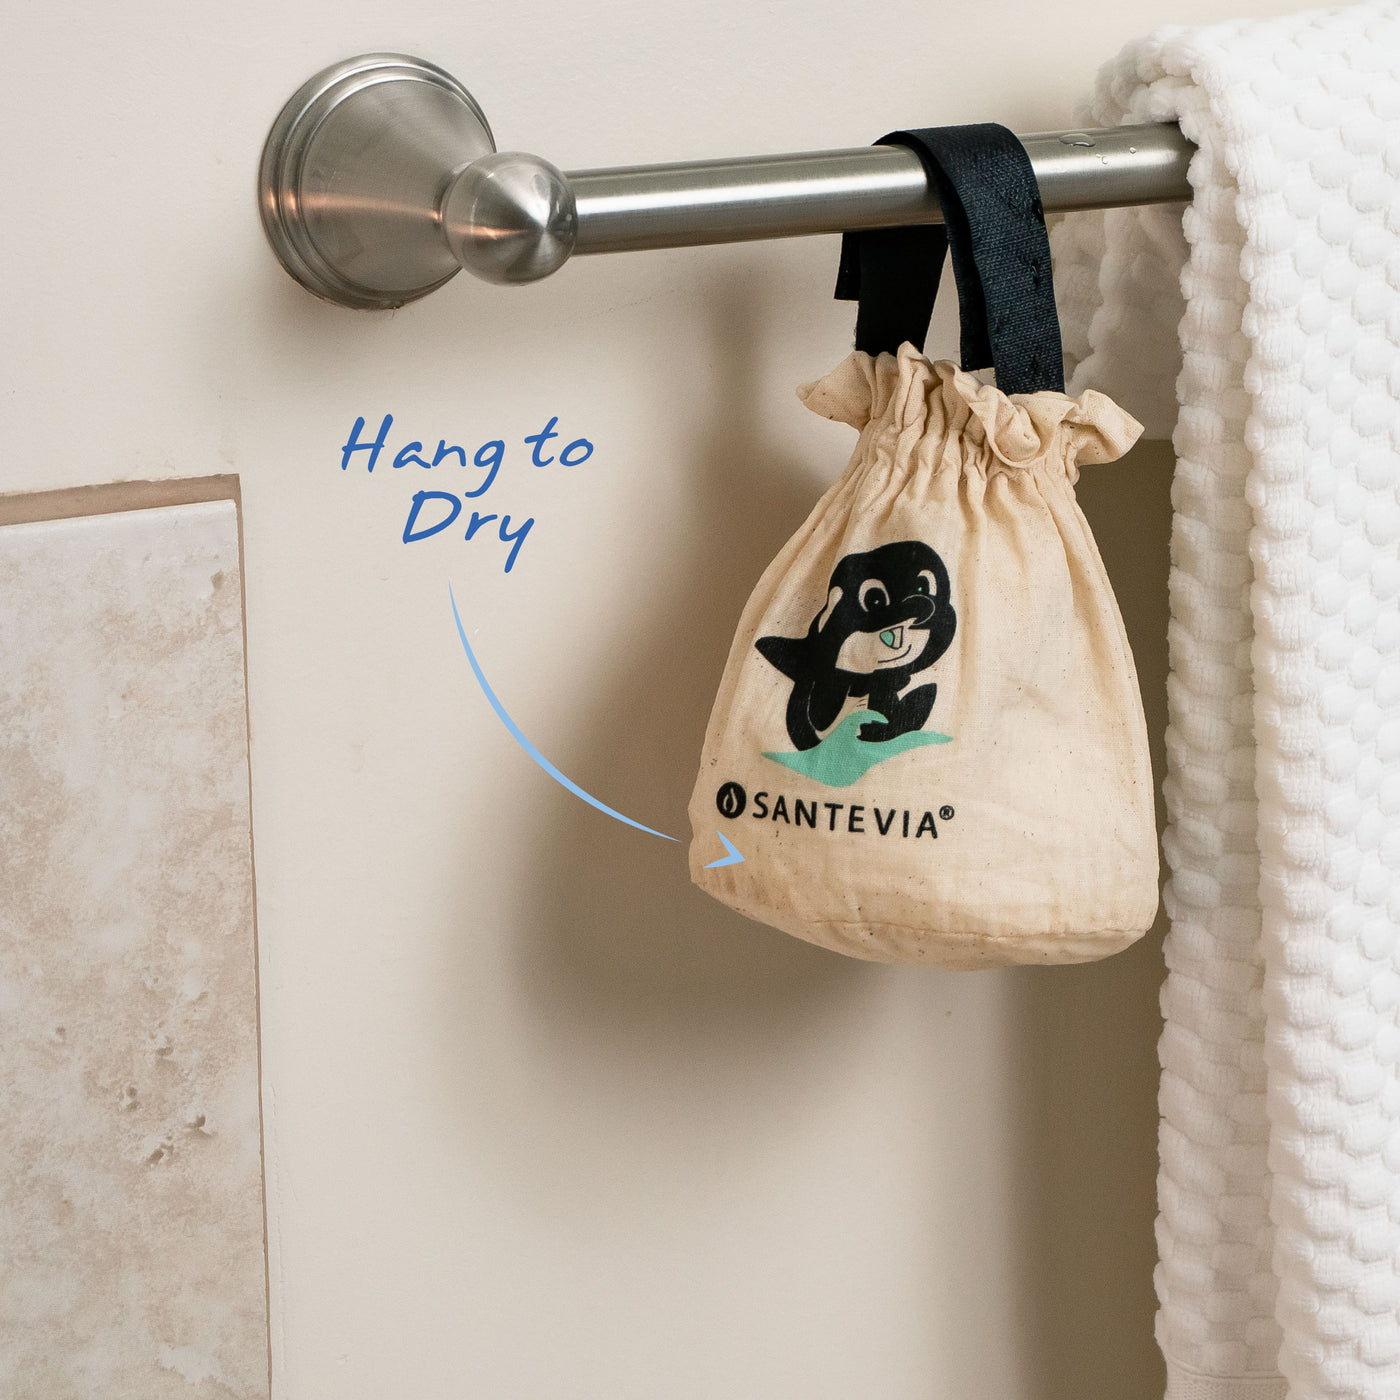 A Santevia Bath Filter hanging to dry on a bathroom towel rack. 